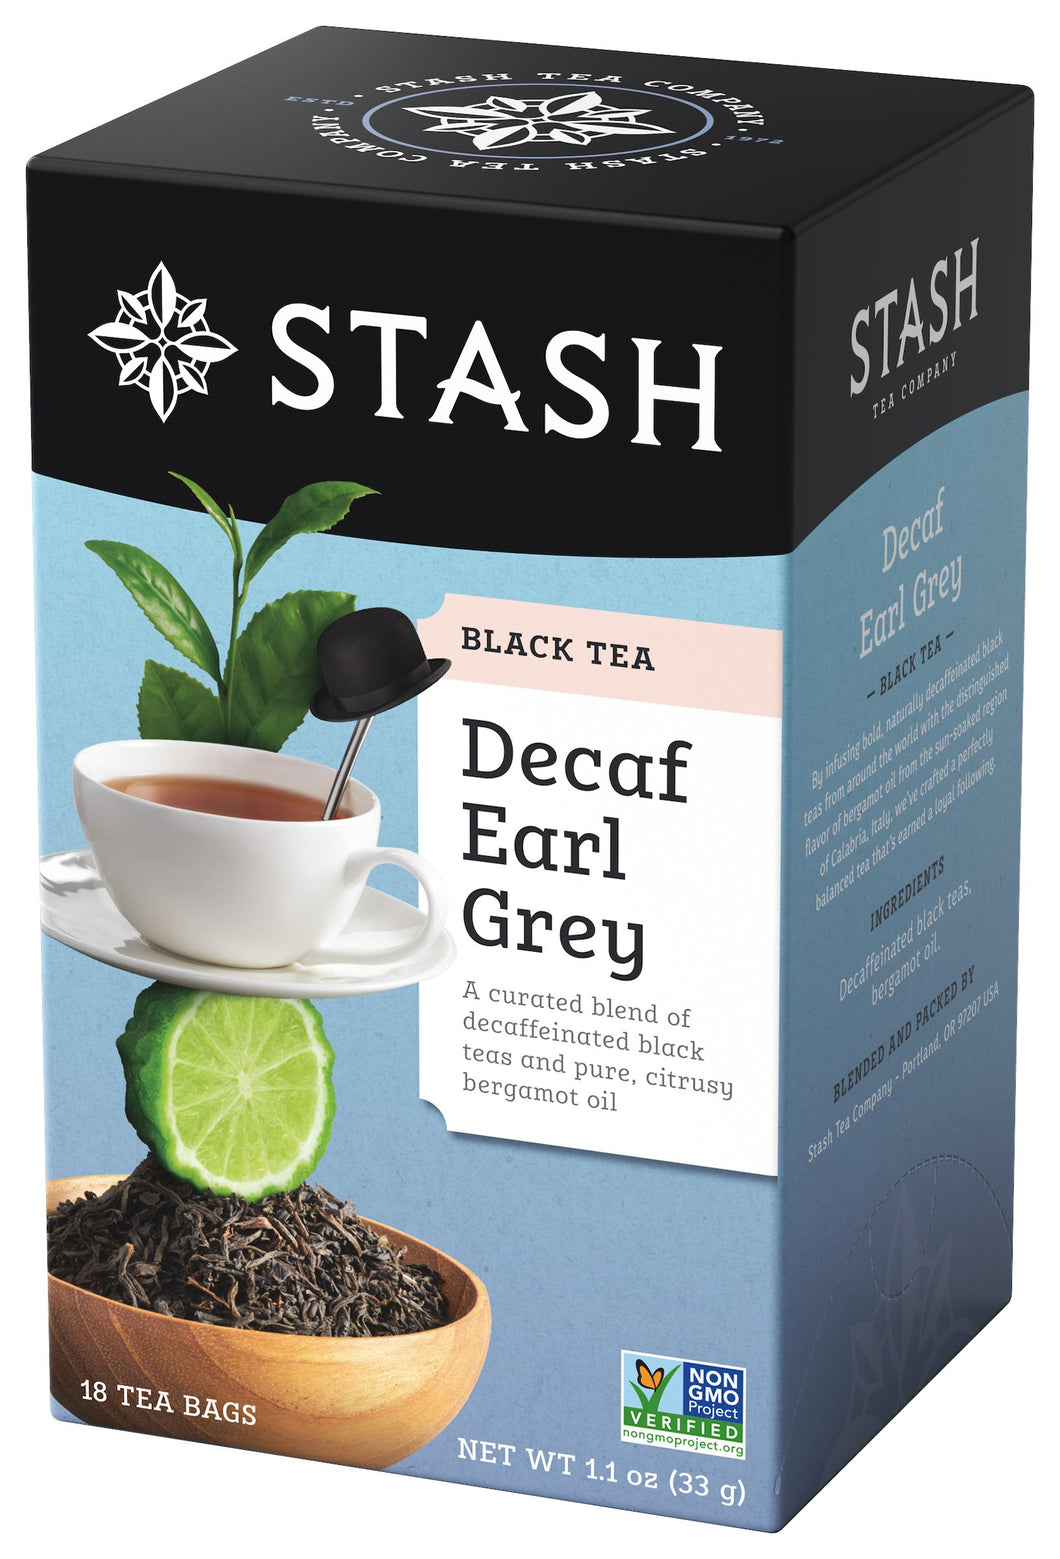 Black tea decaf earl grey - Stash